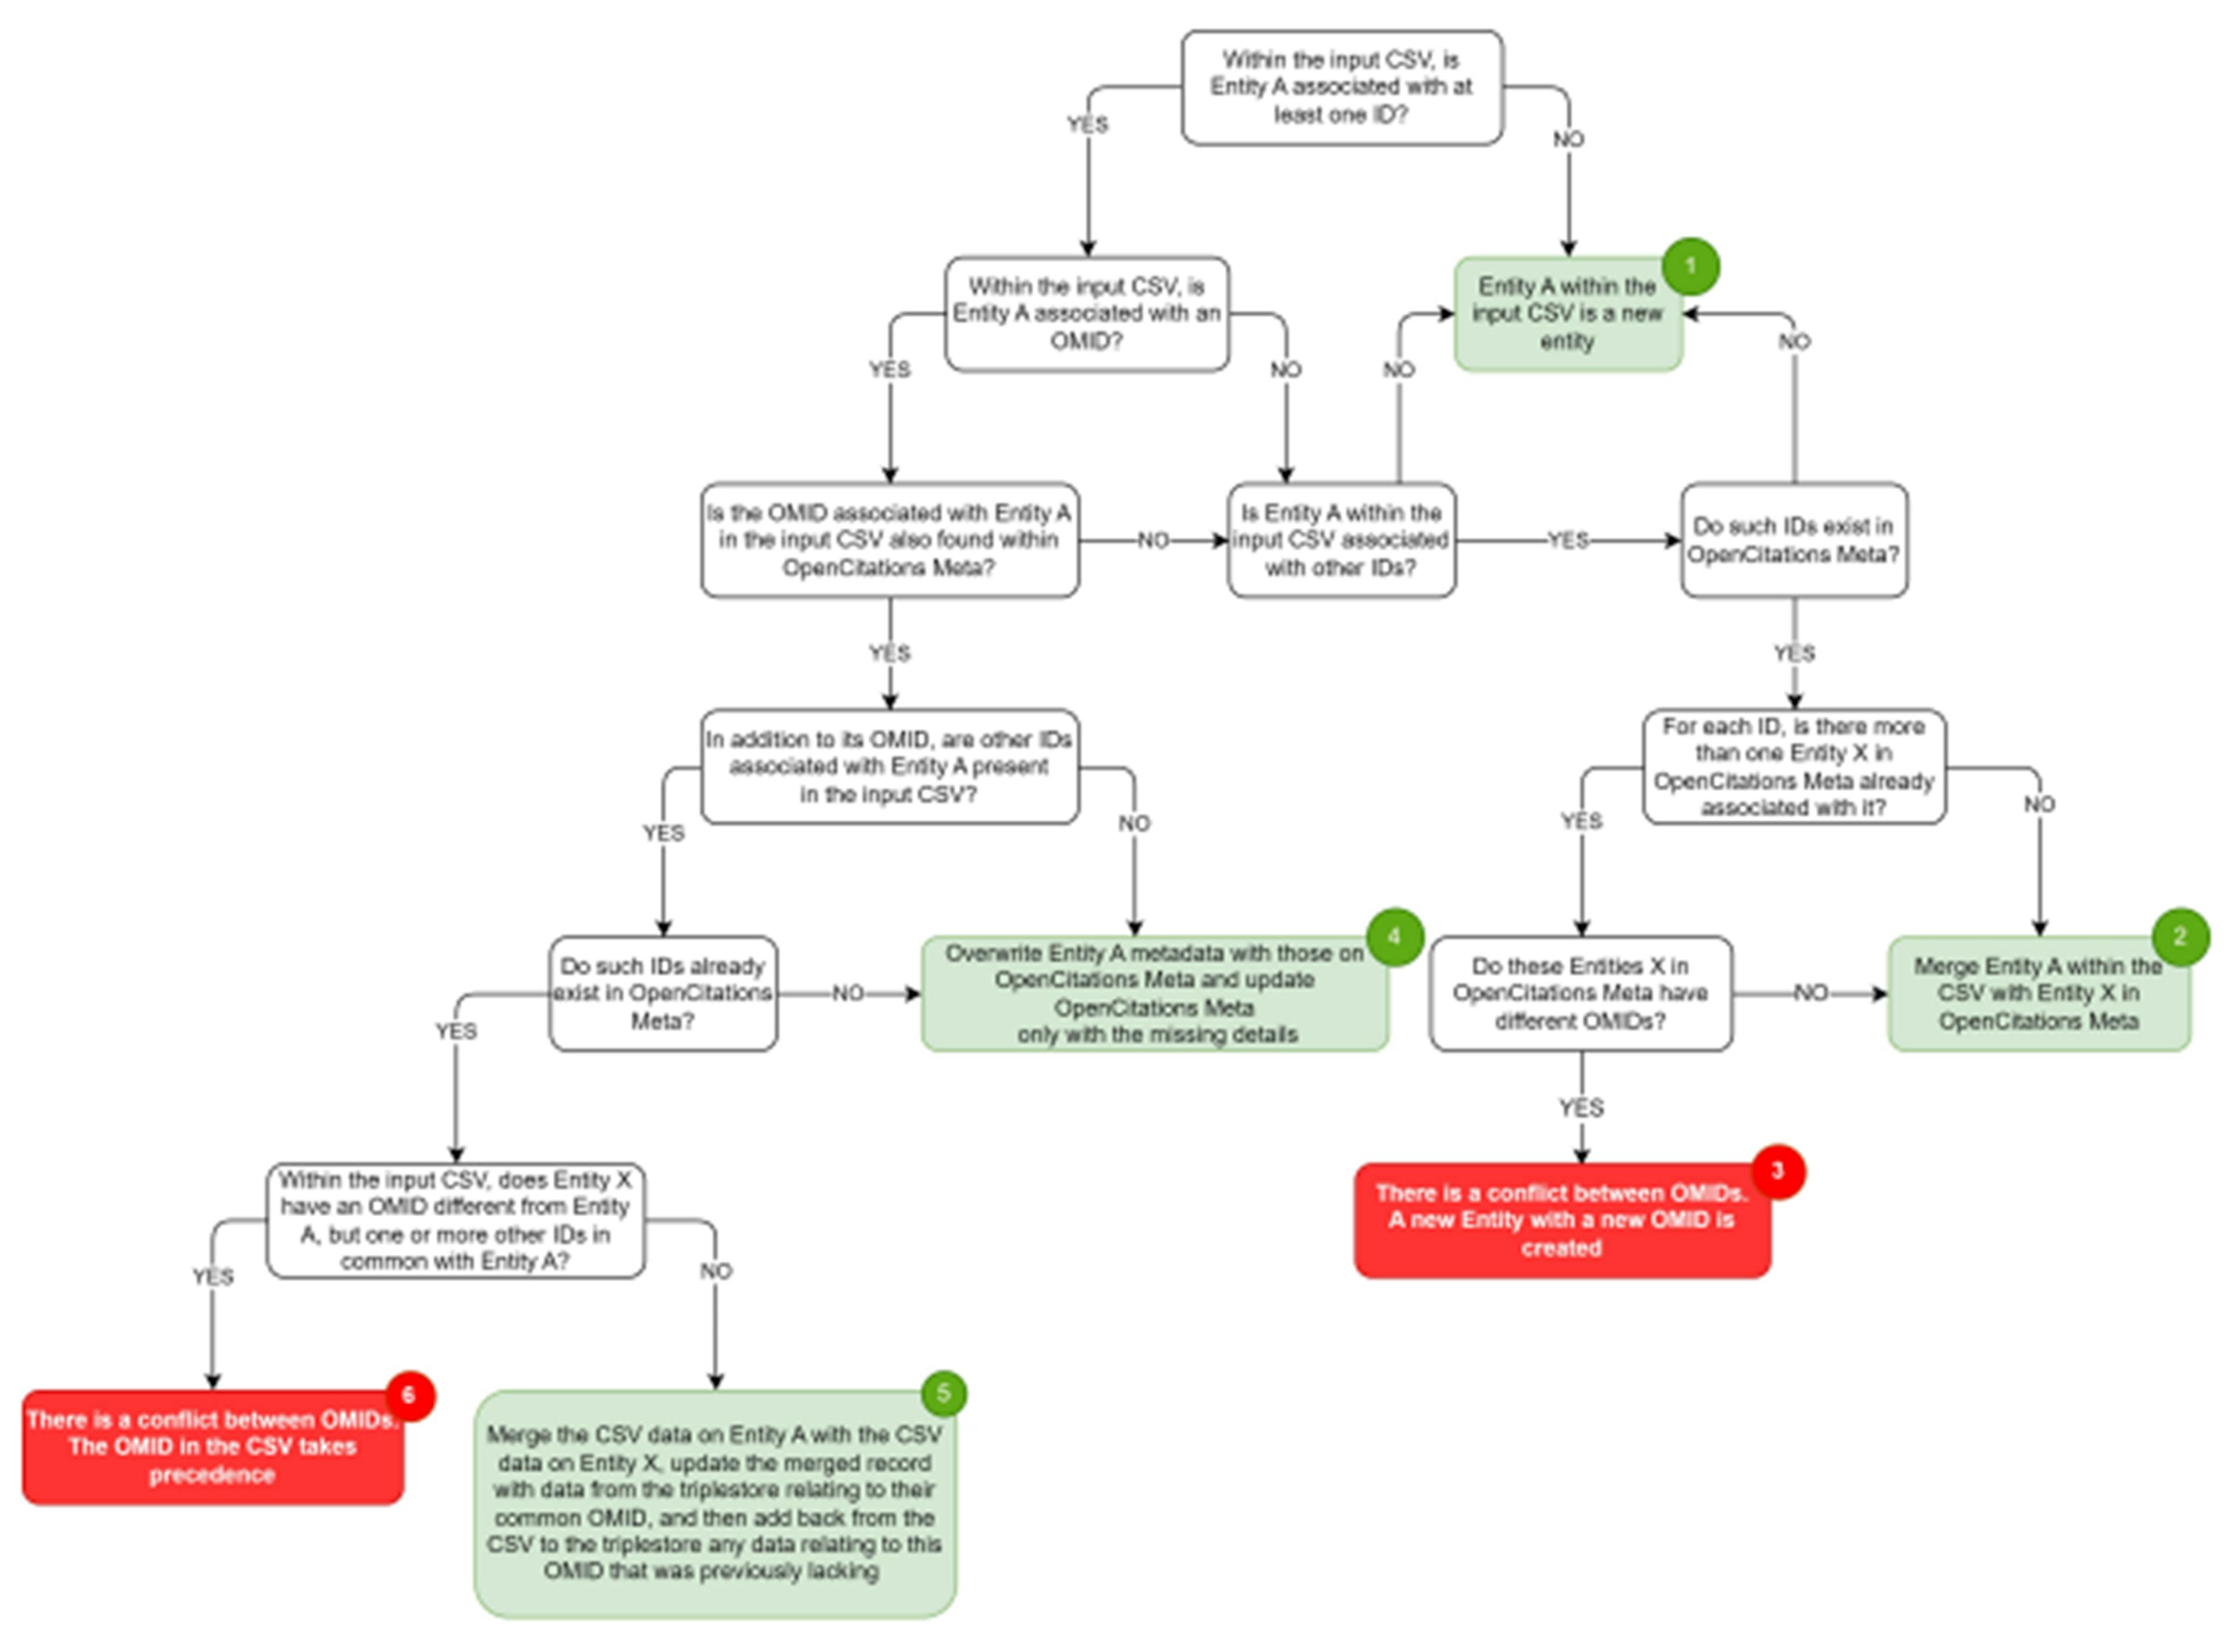 Figure 3: Deduplication decision tree